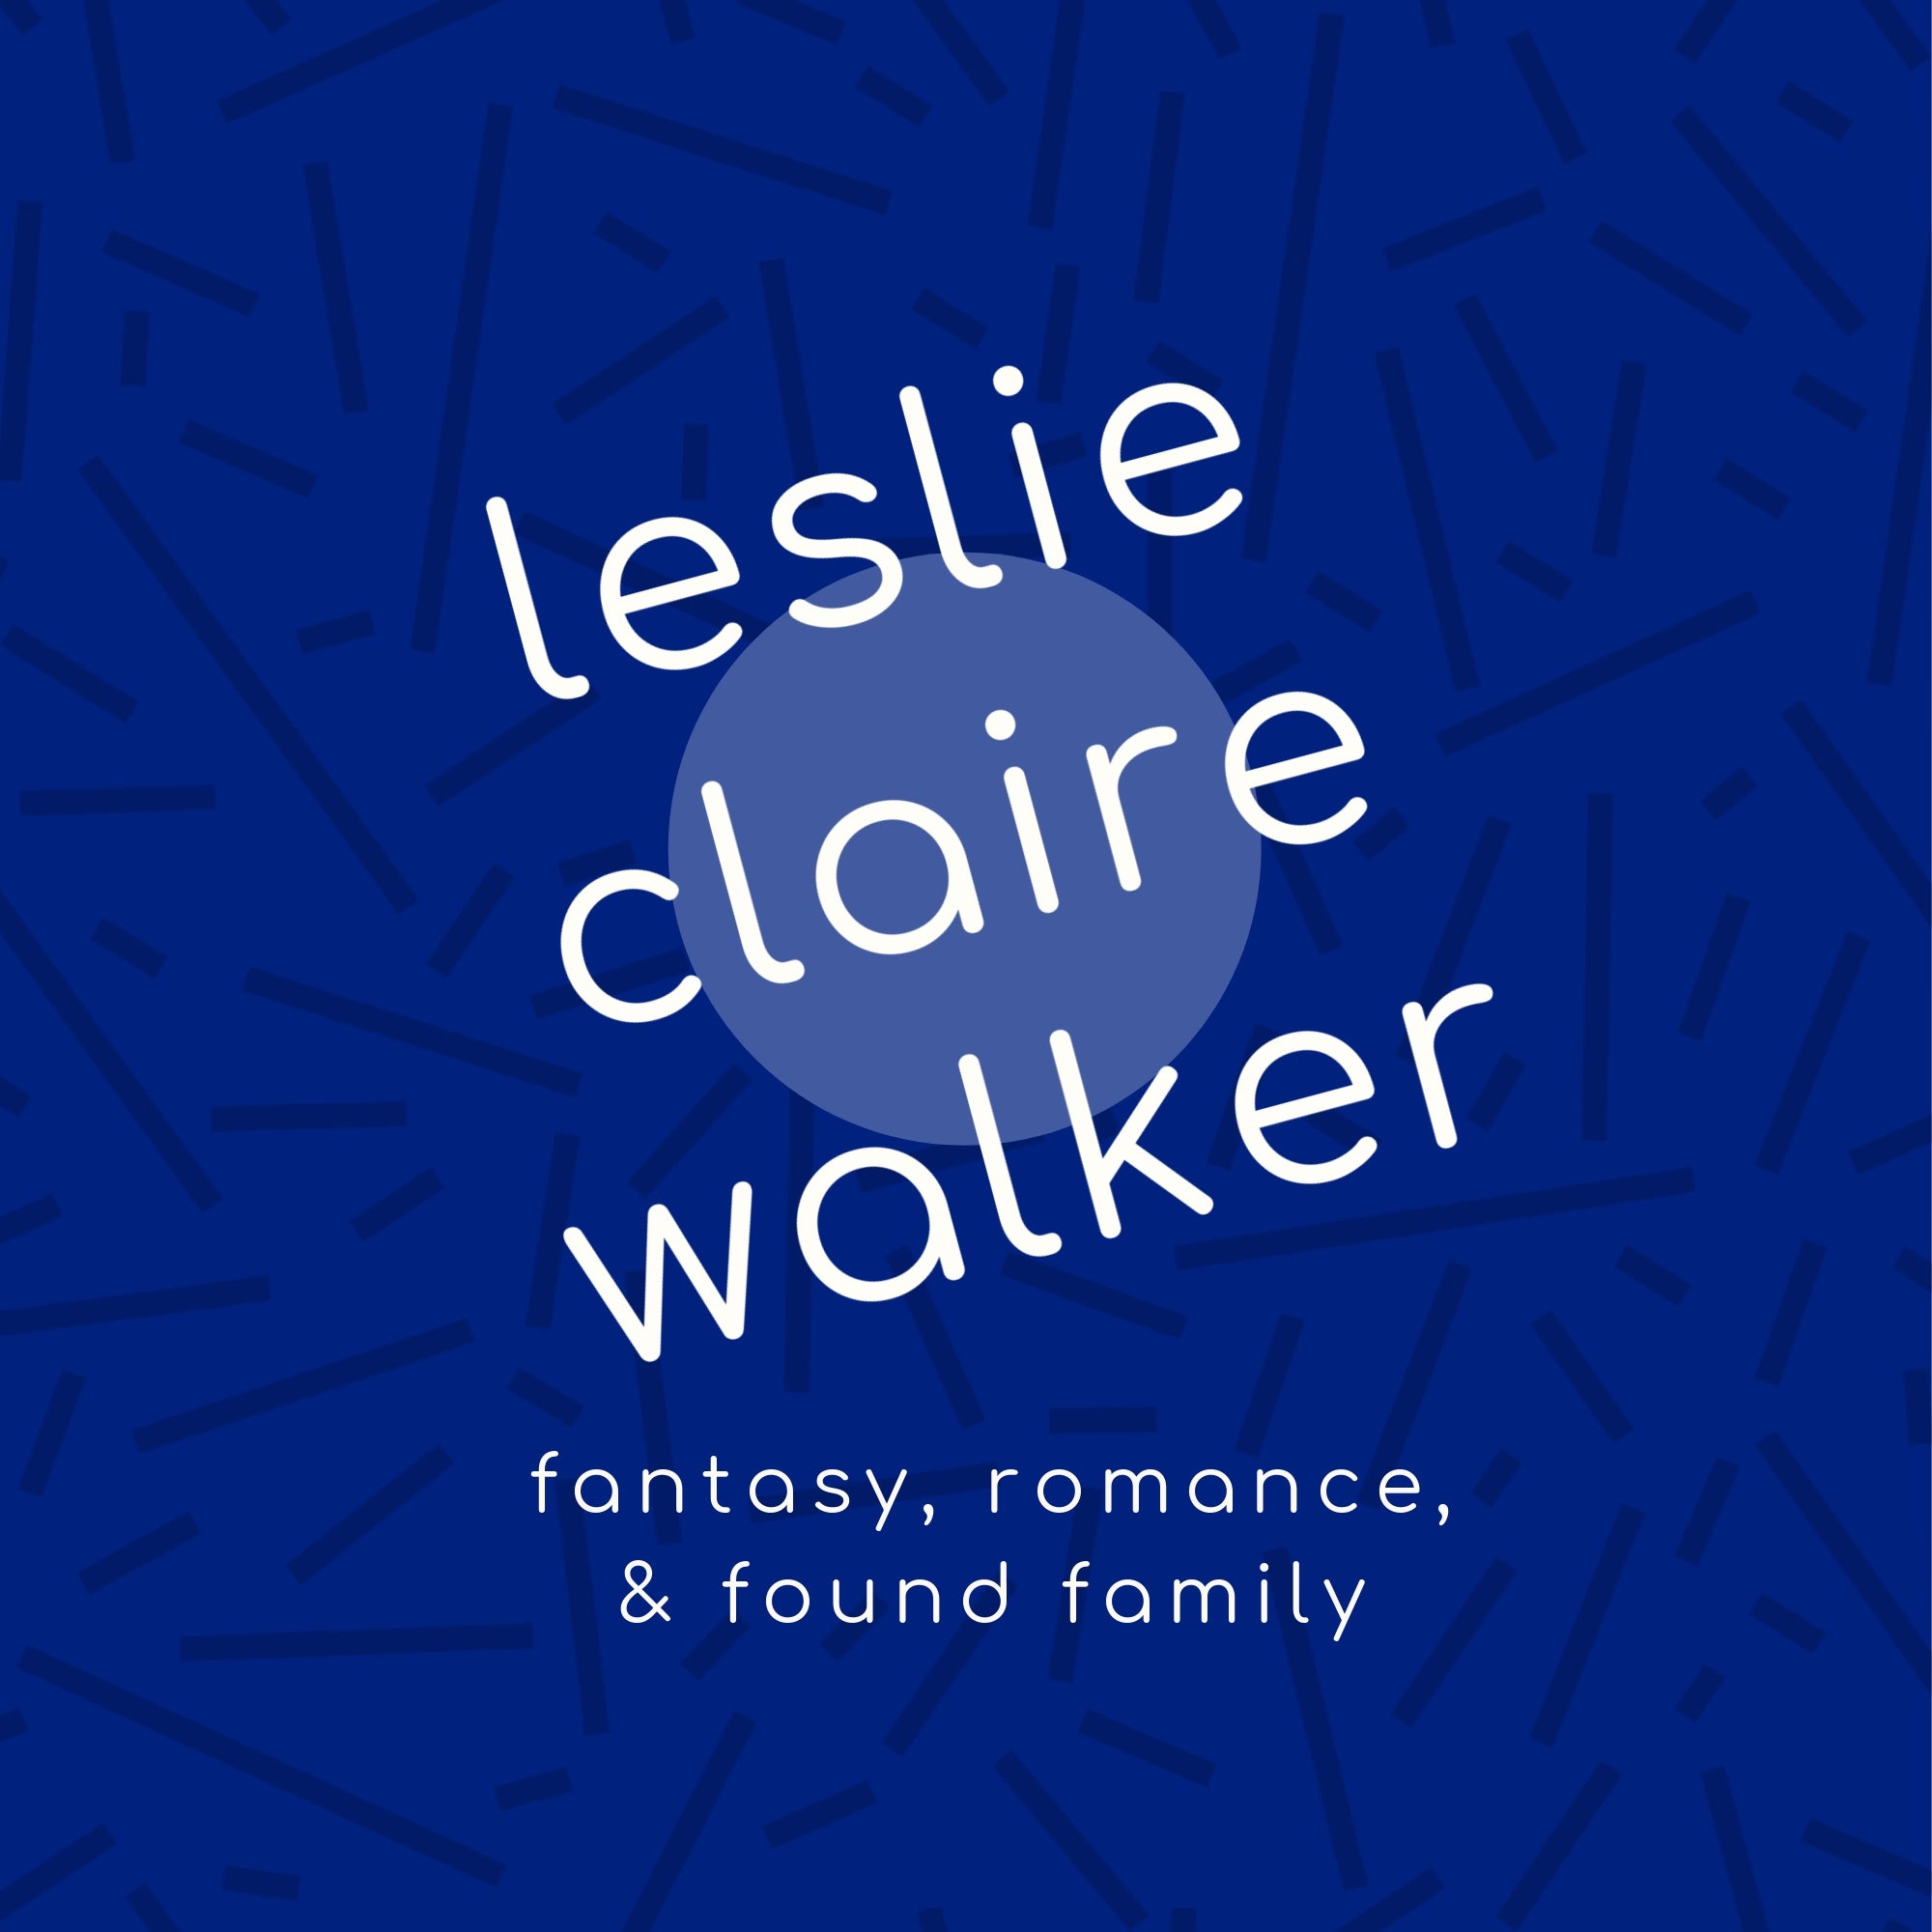 Leslie Claire Walker